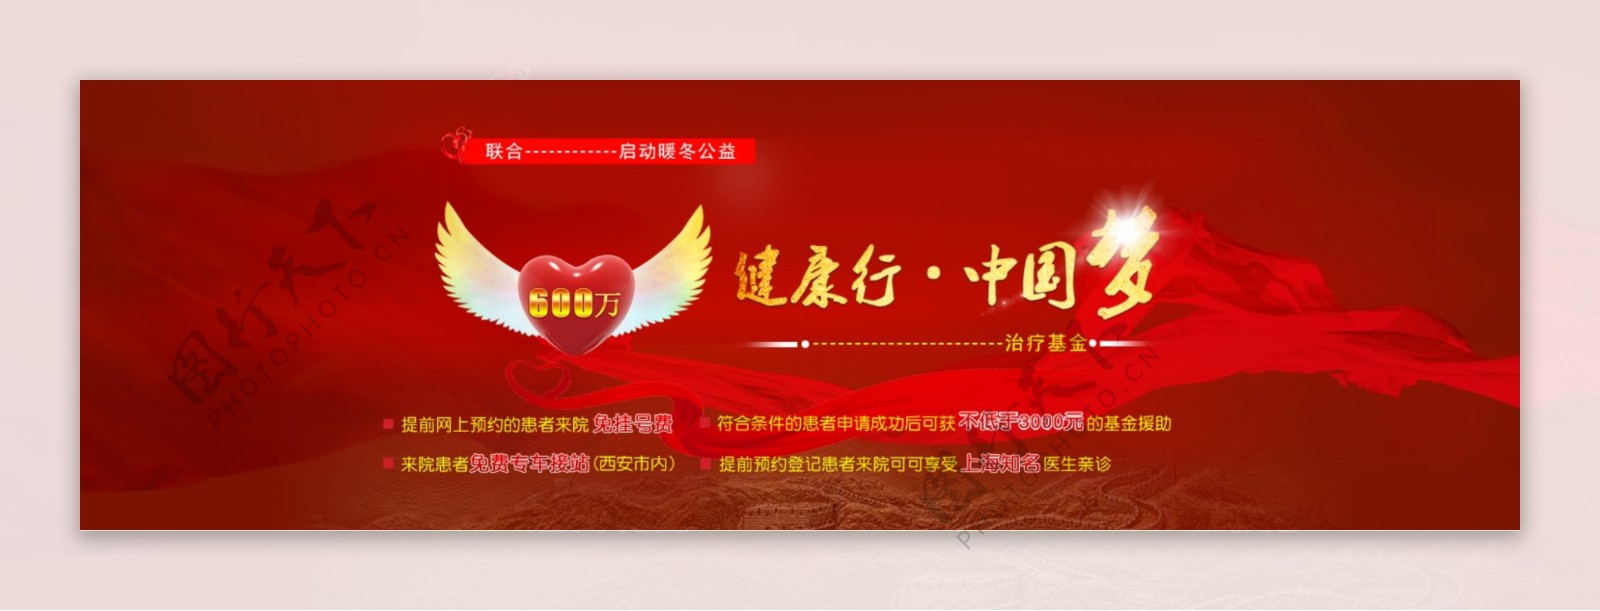 红色公益banner图片